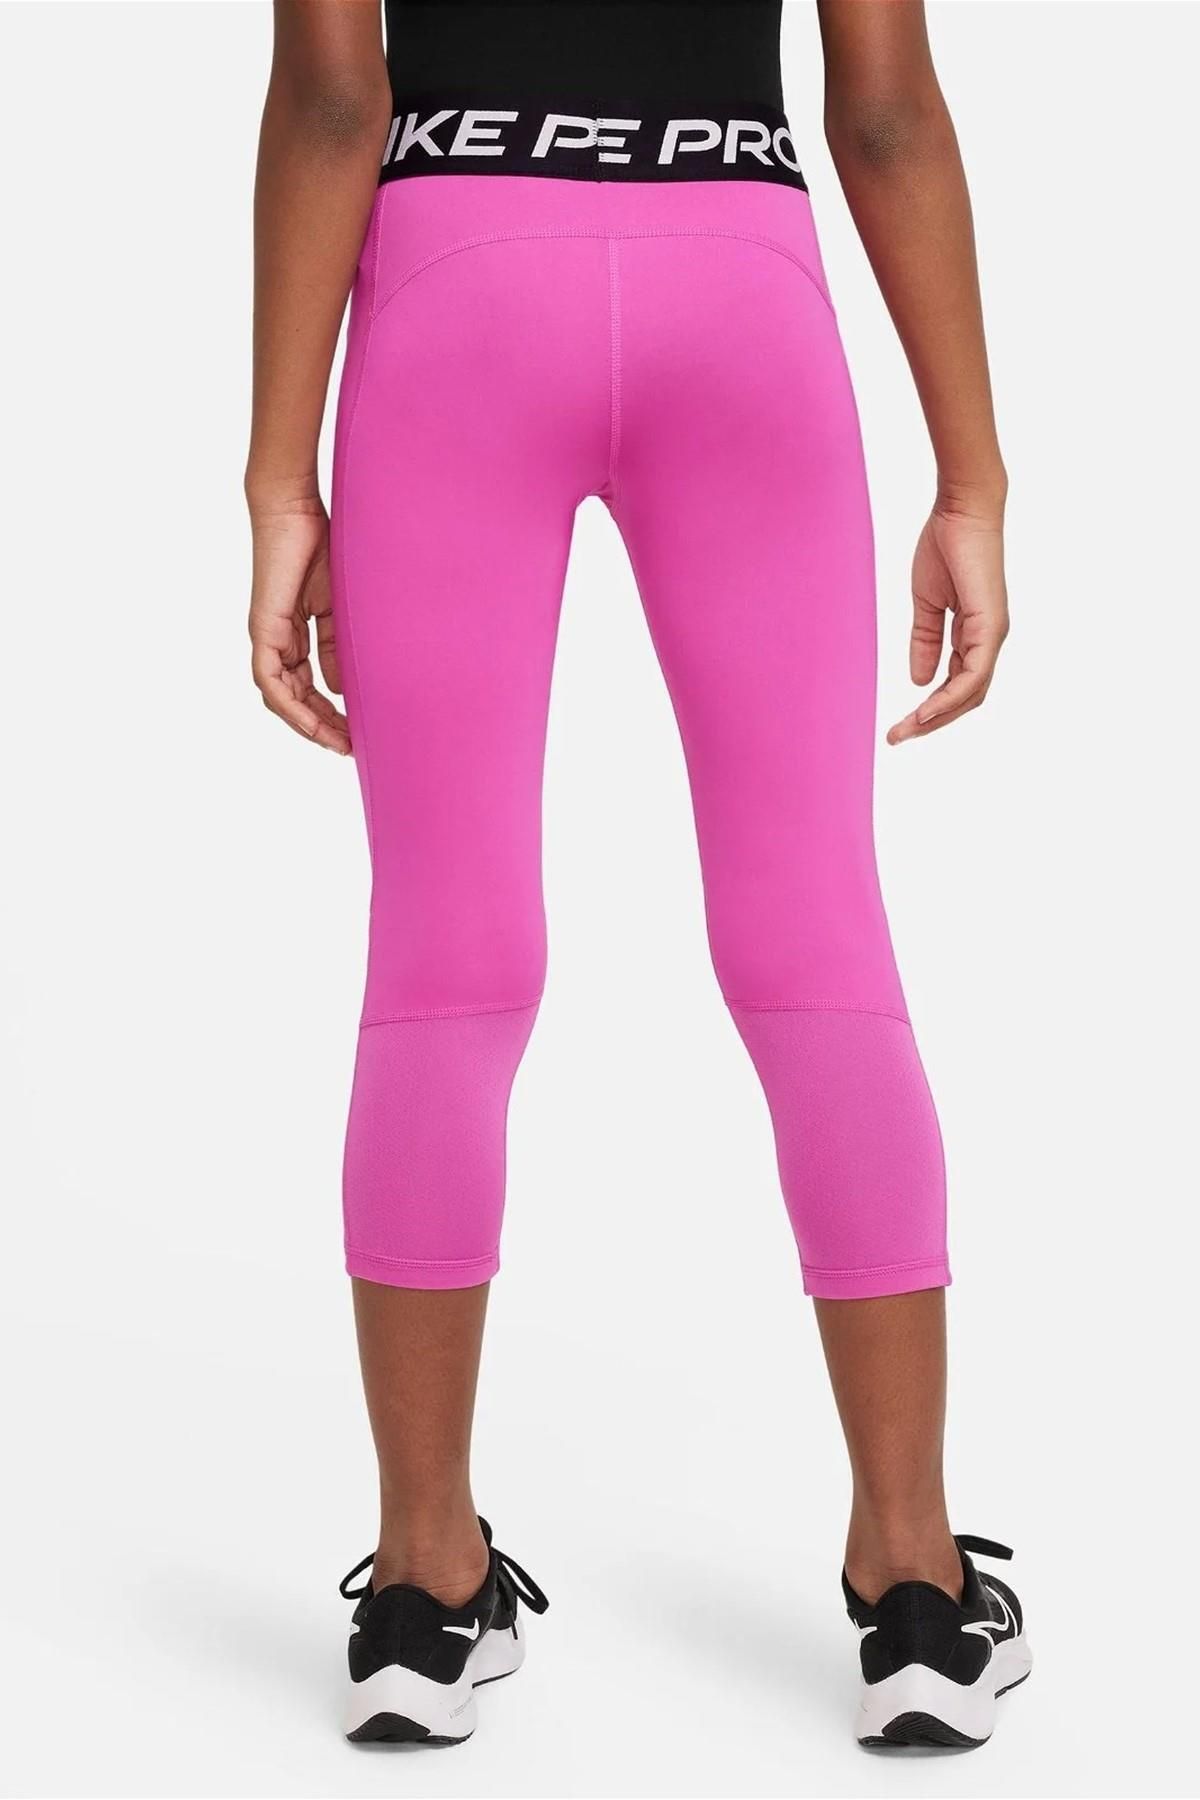 Nike Dri Fit Pink Triangle Running Athletic Capri